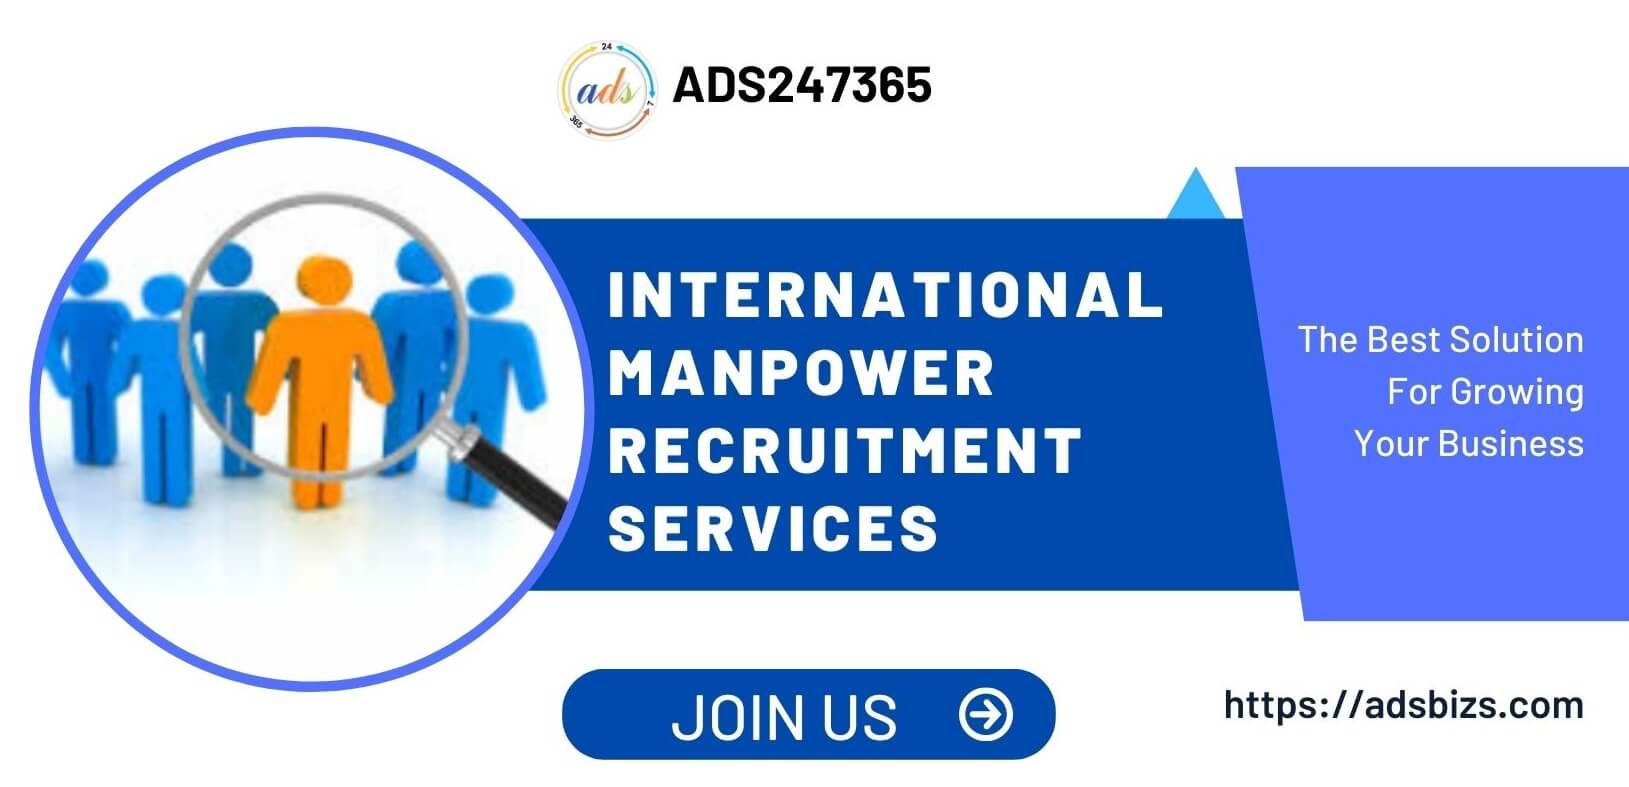 International manpower recruitment services-eb66b2c5